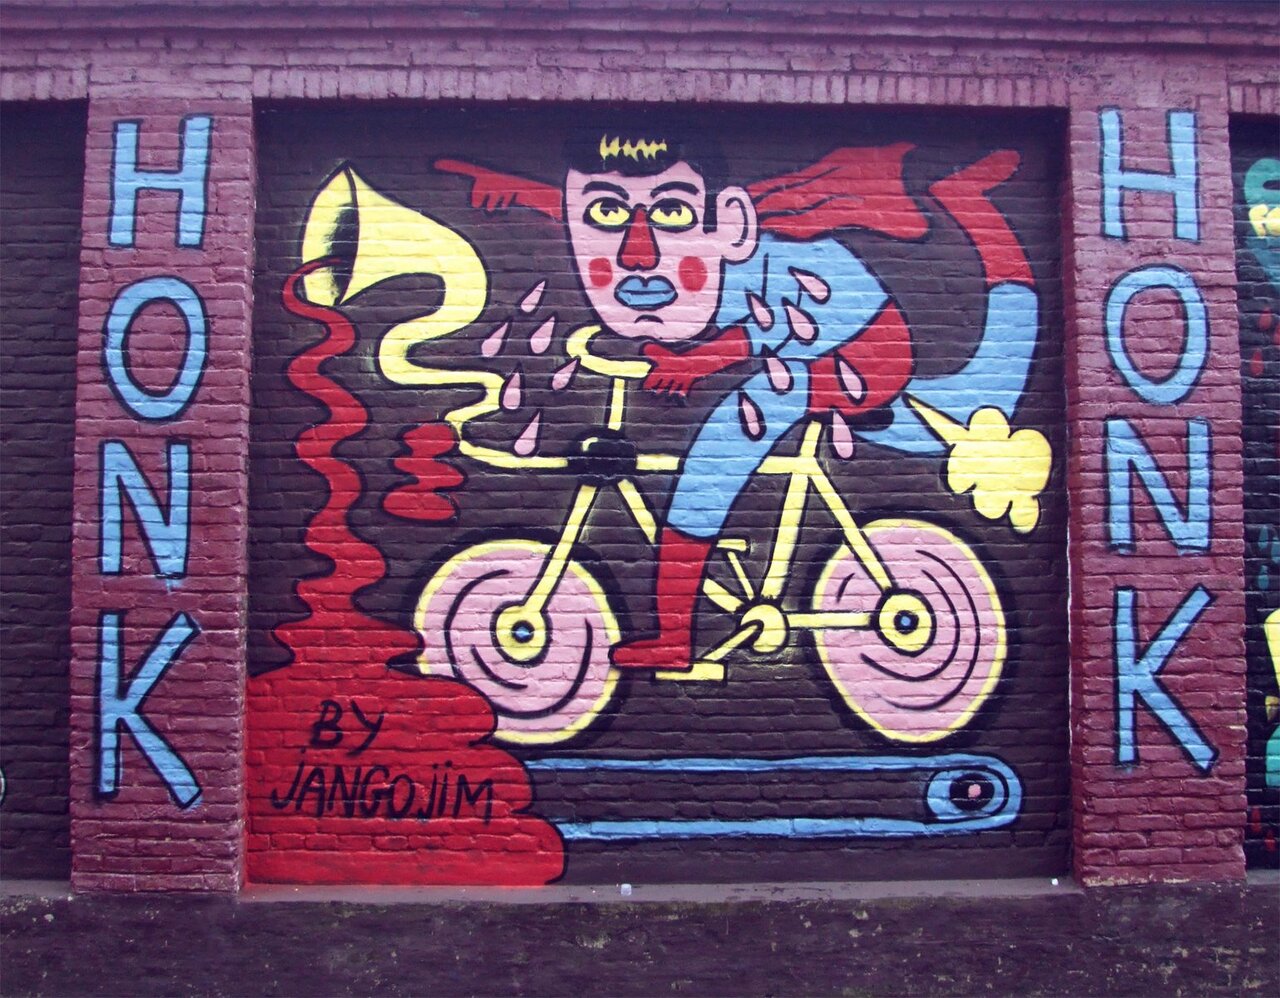 HONK HONK. Recap to a mural I did a few years ago in Gent. My first Graffiti. #bicycle #streetart #graffiti #fart https://t.co/w0SjxwxRma